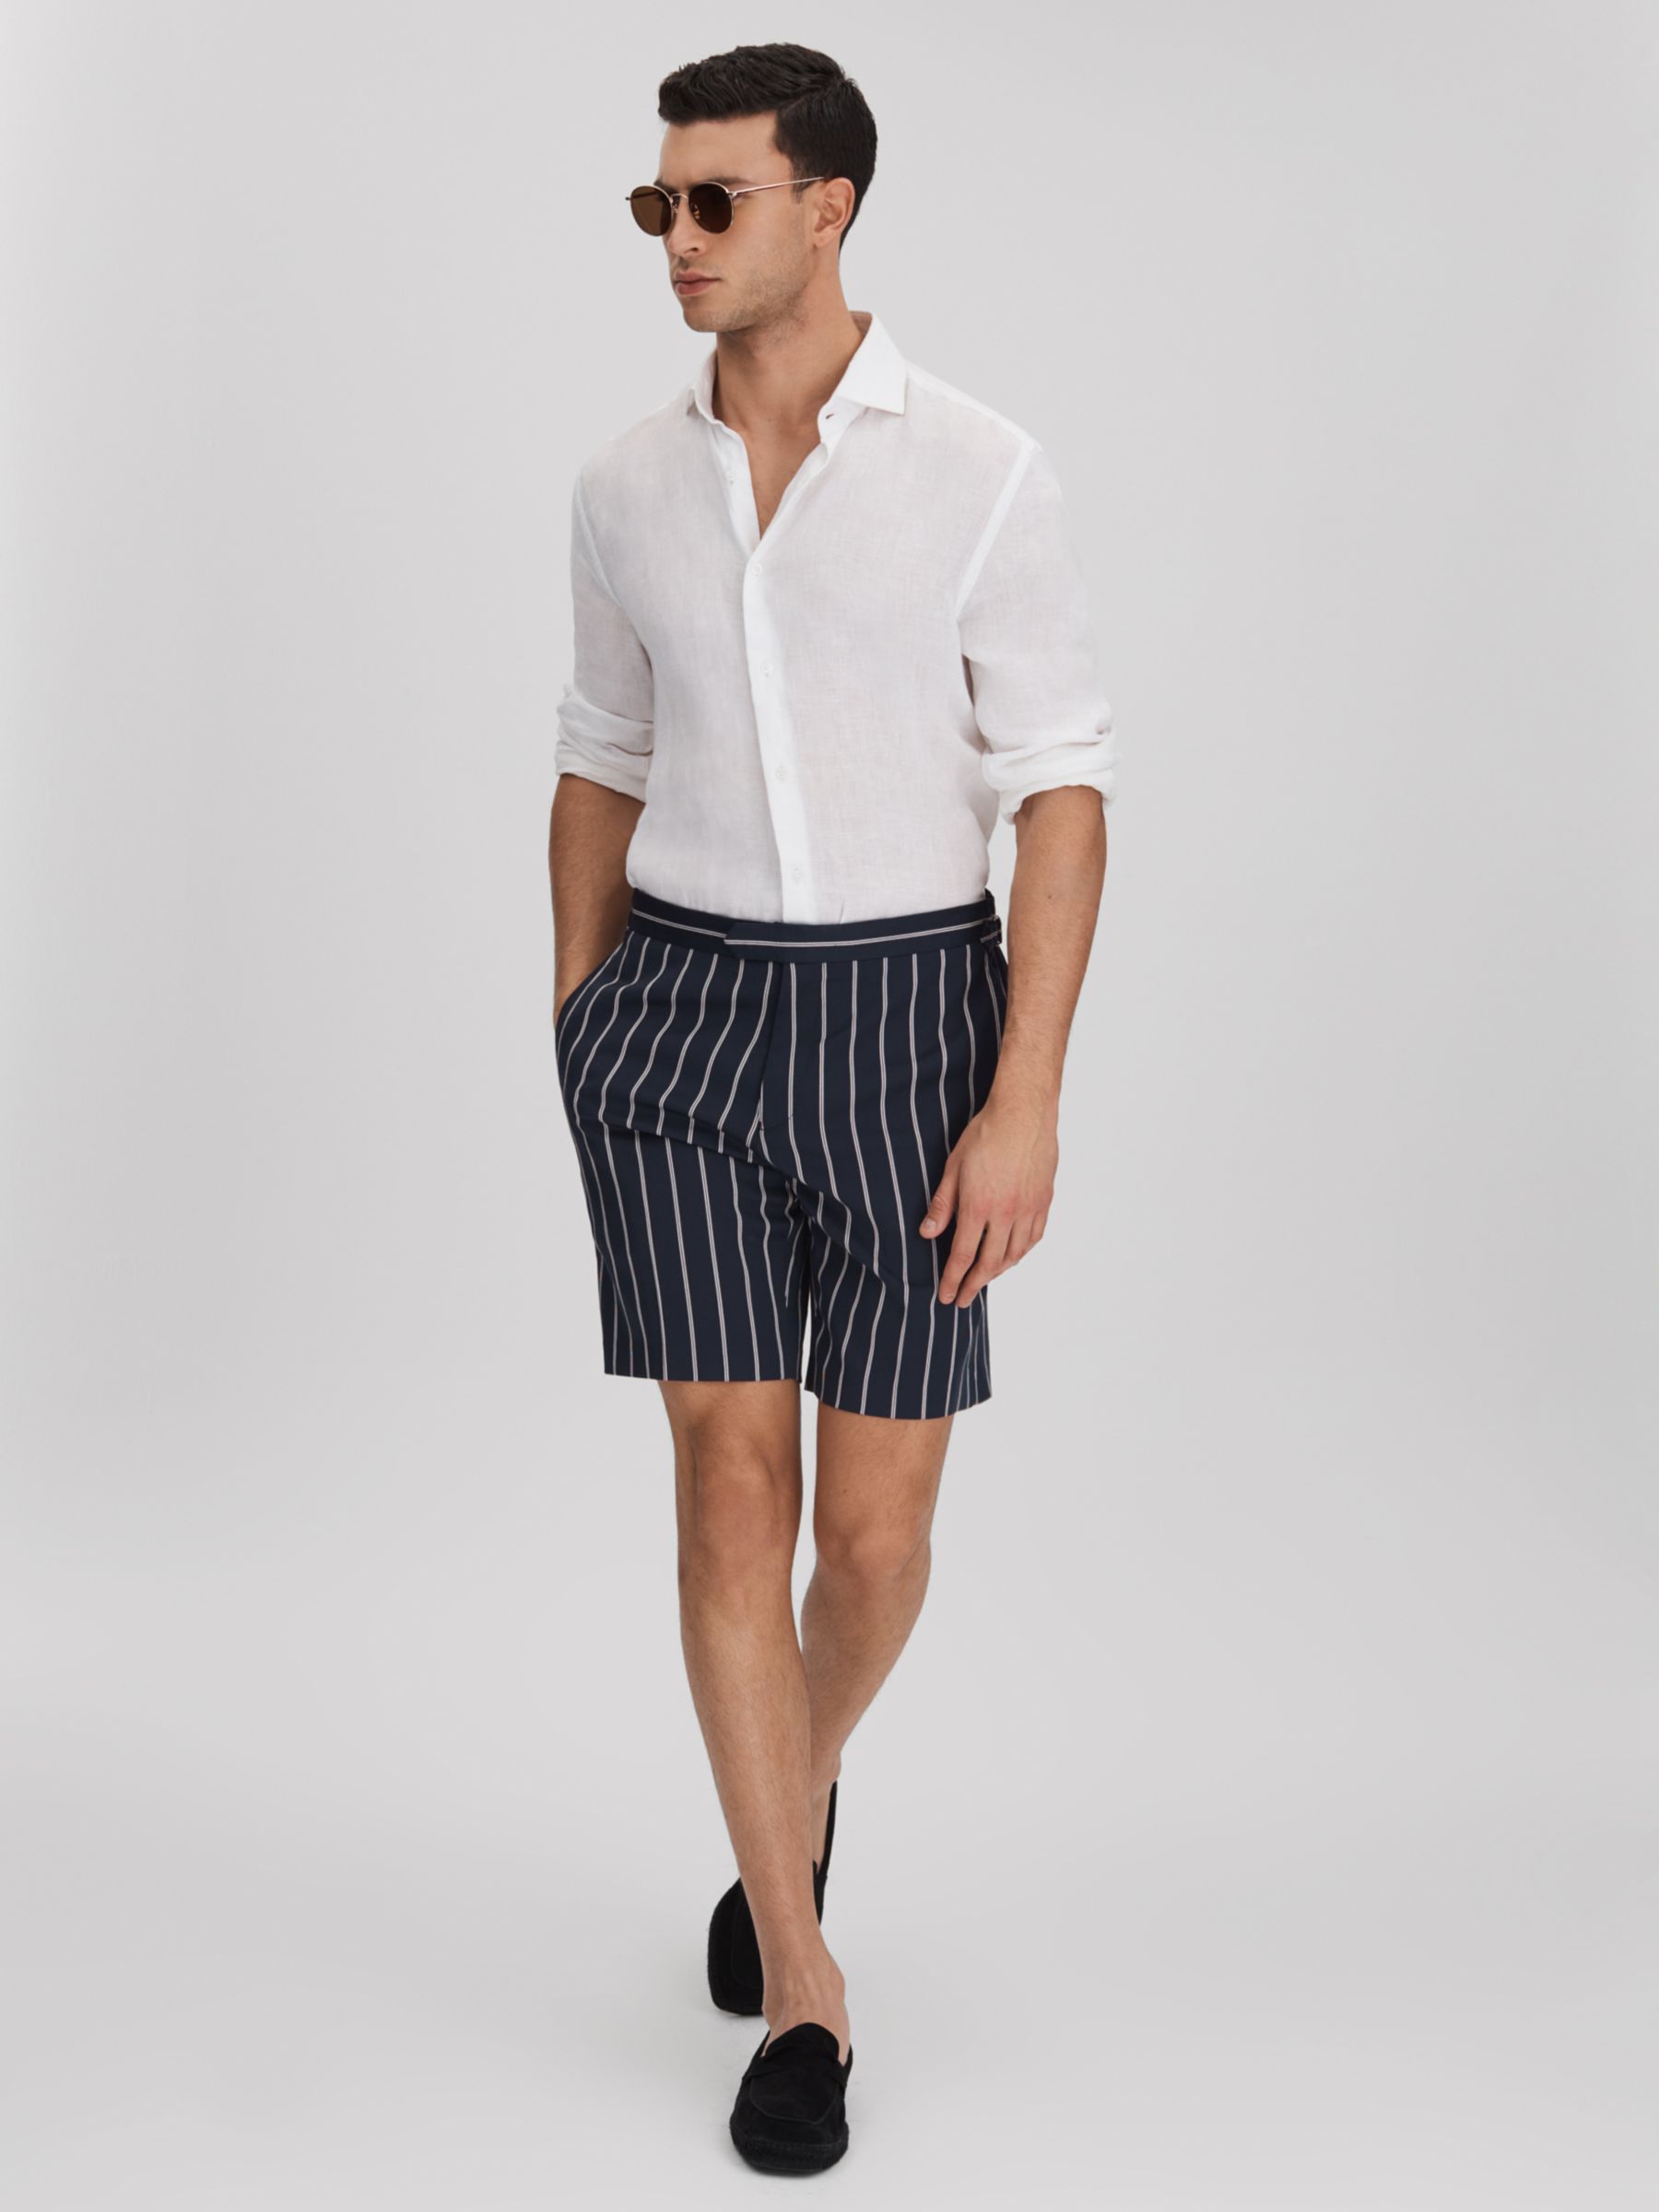 Reiss Lake Fine Stripe Side Adjustable Shorts, Navy/White, 28R